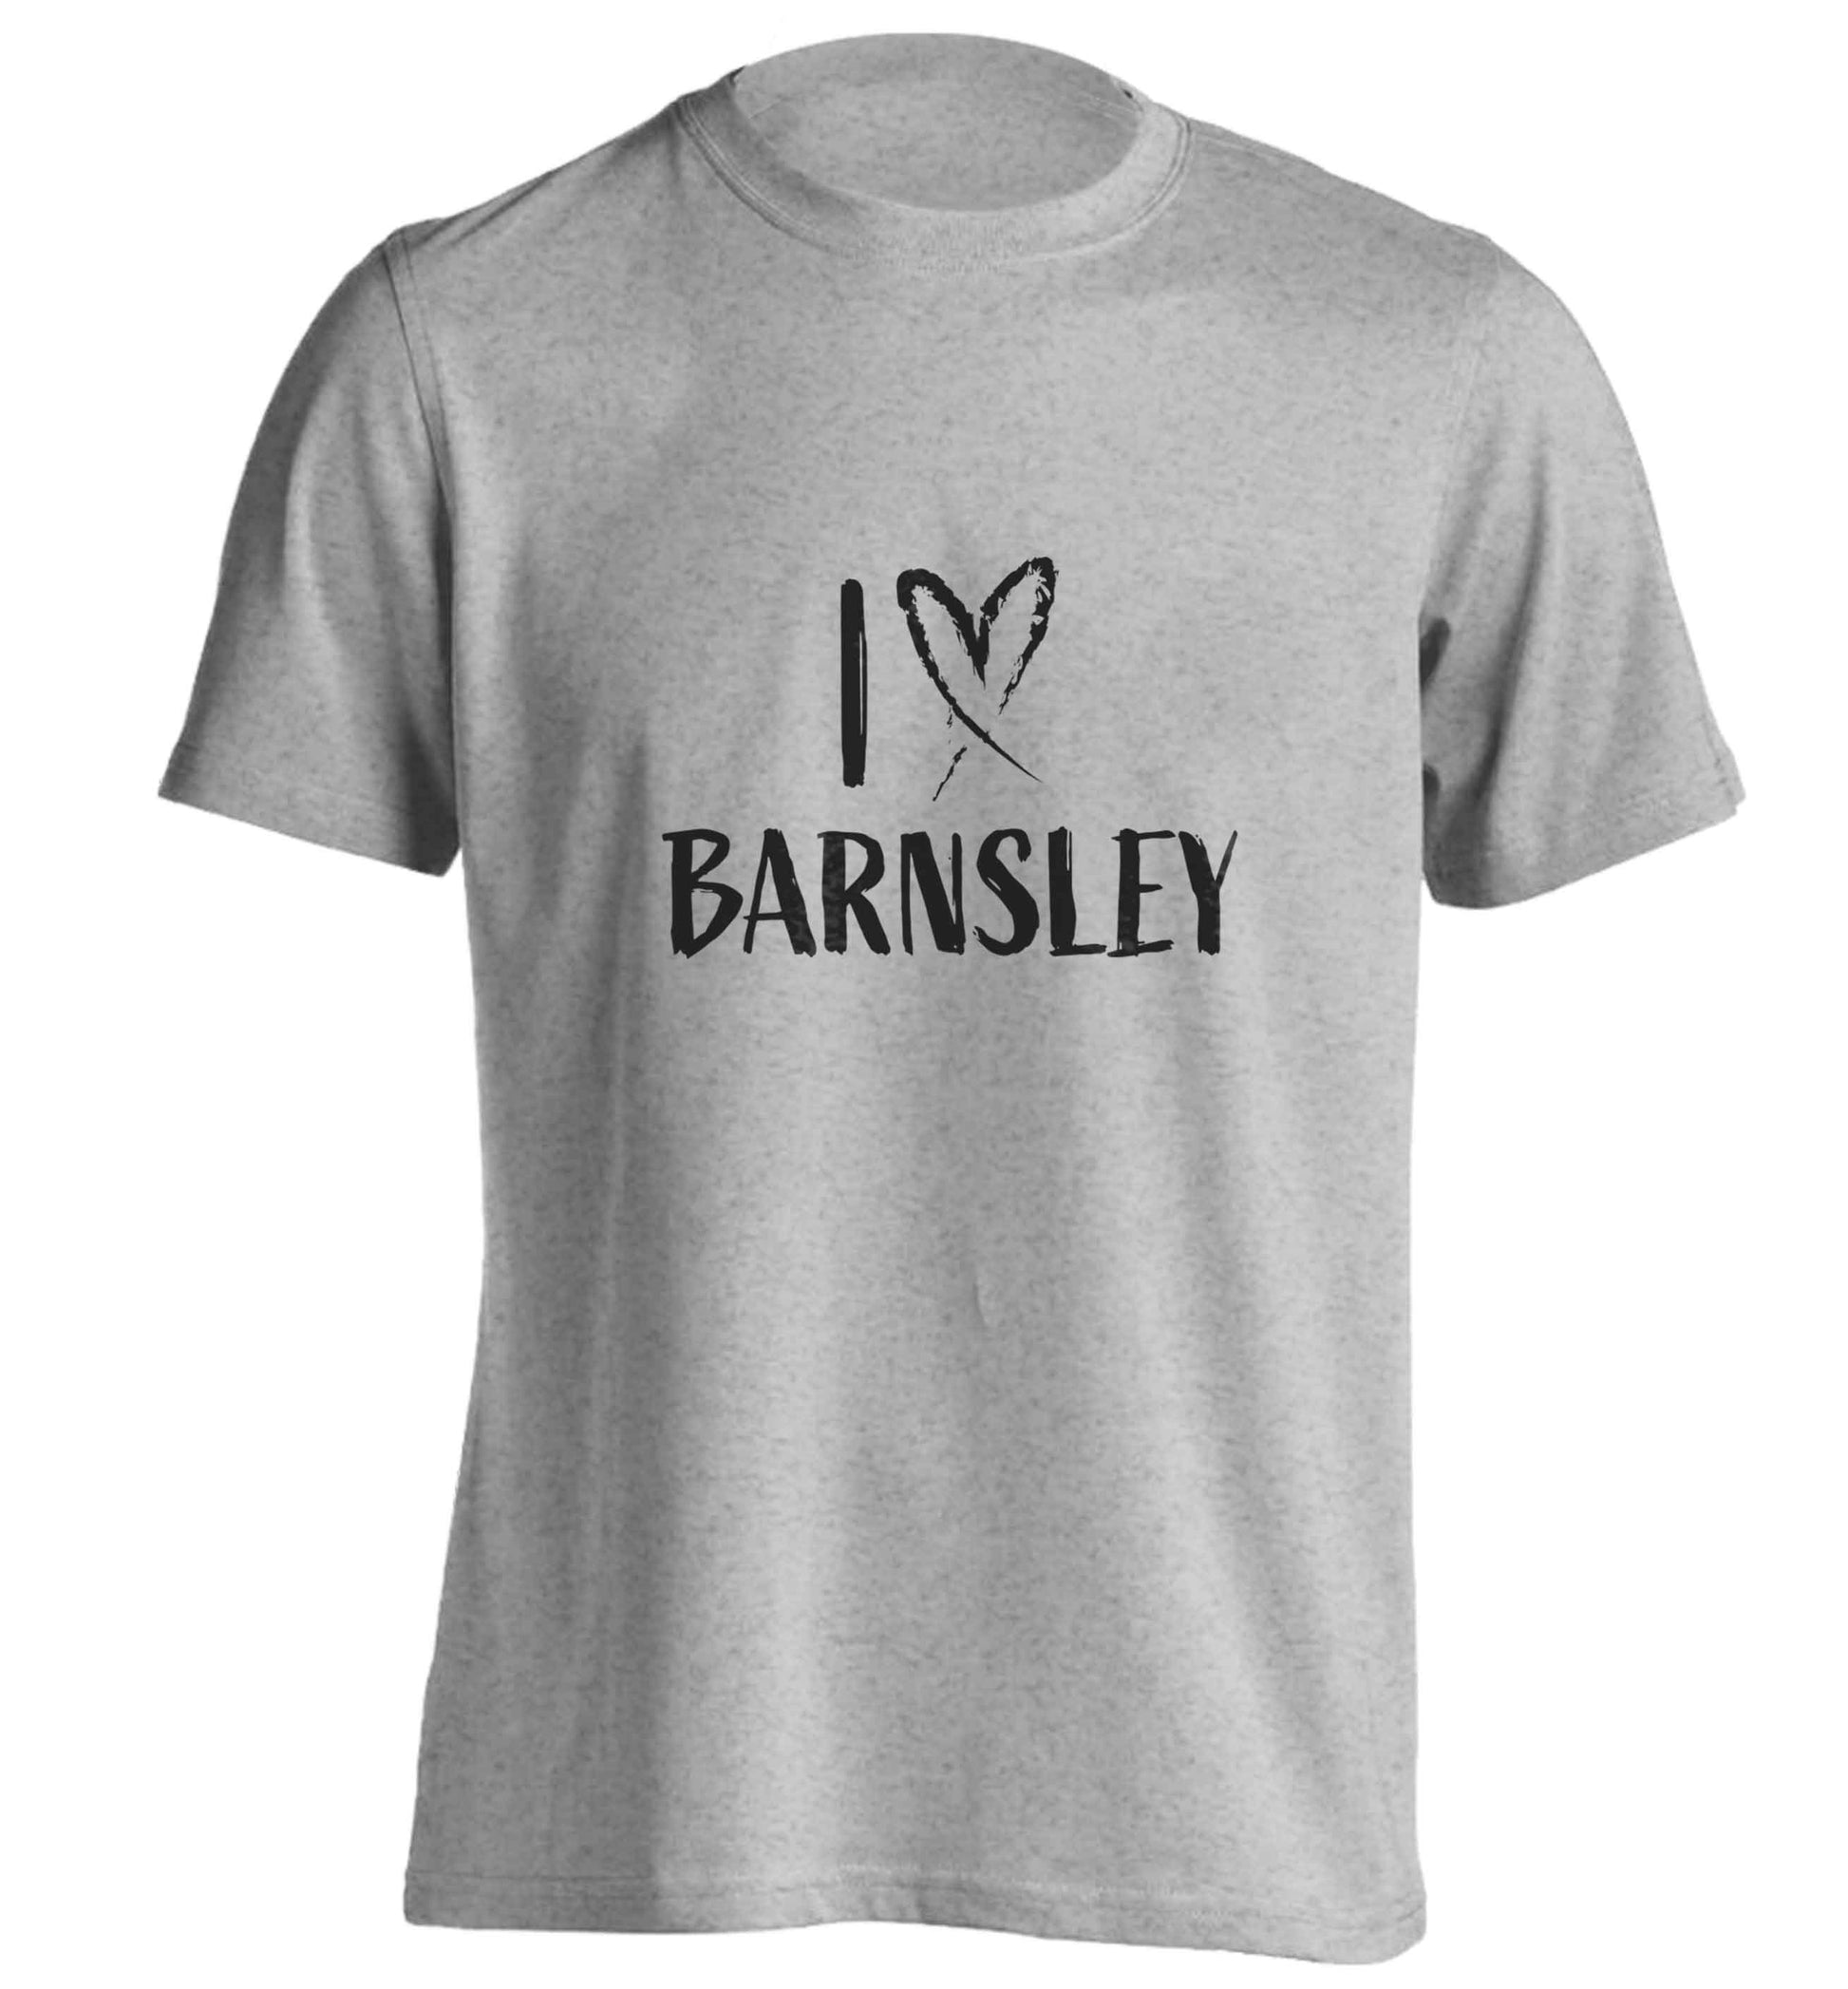 I love Barnsley adults unisex grey Tshirt 2XL